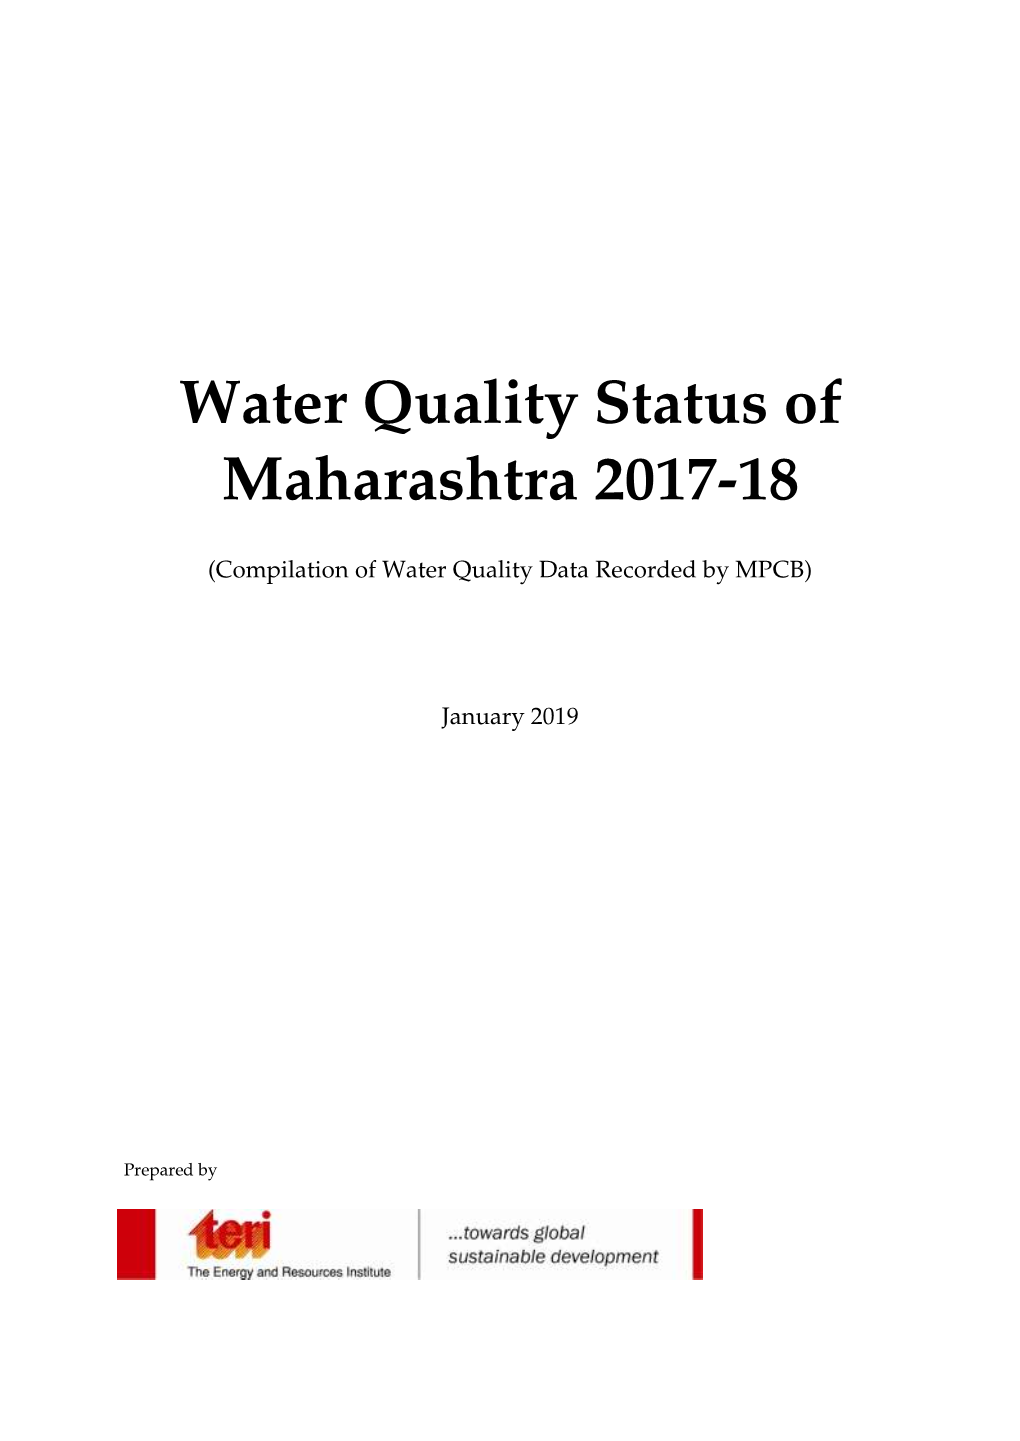 Water Quality Status of Maharashtra 2017-18